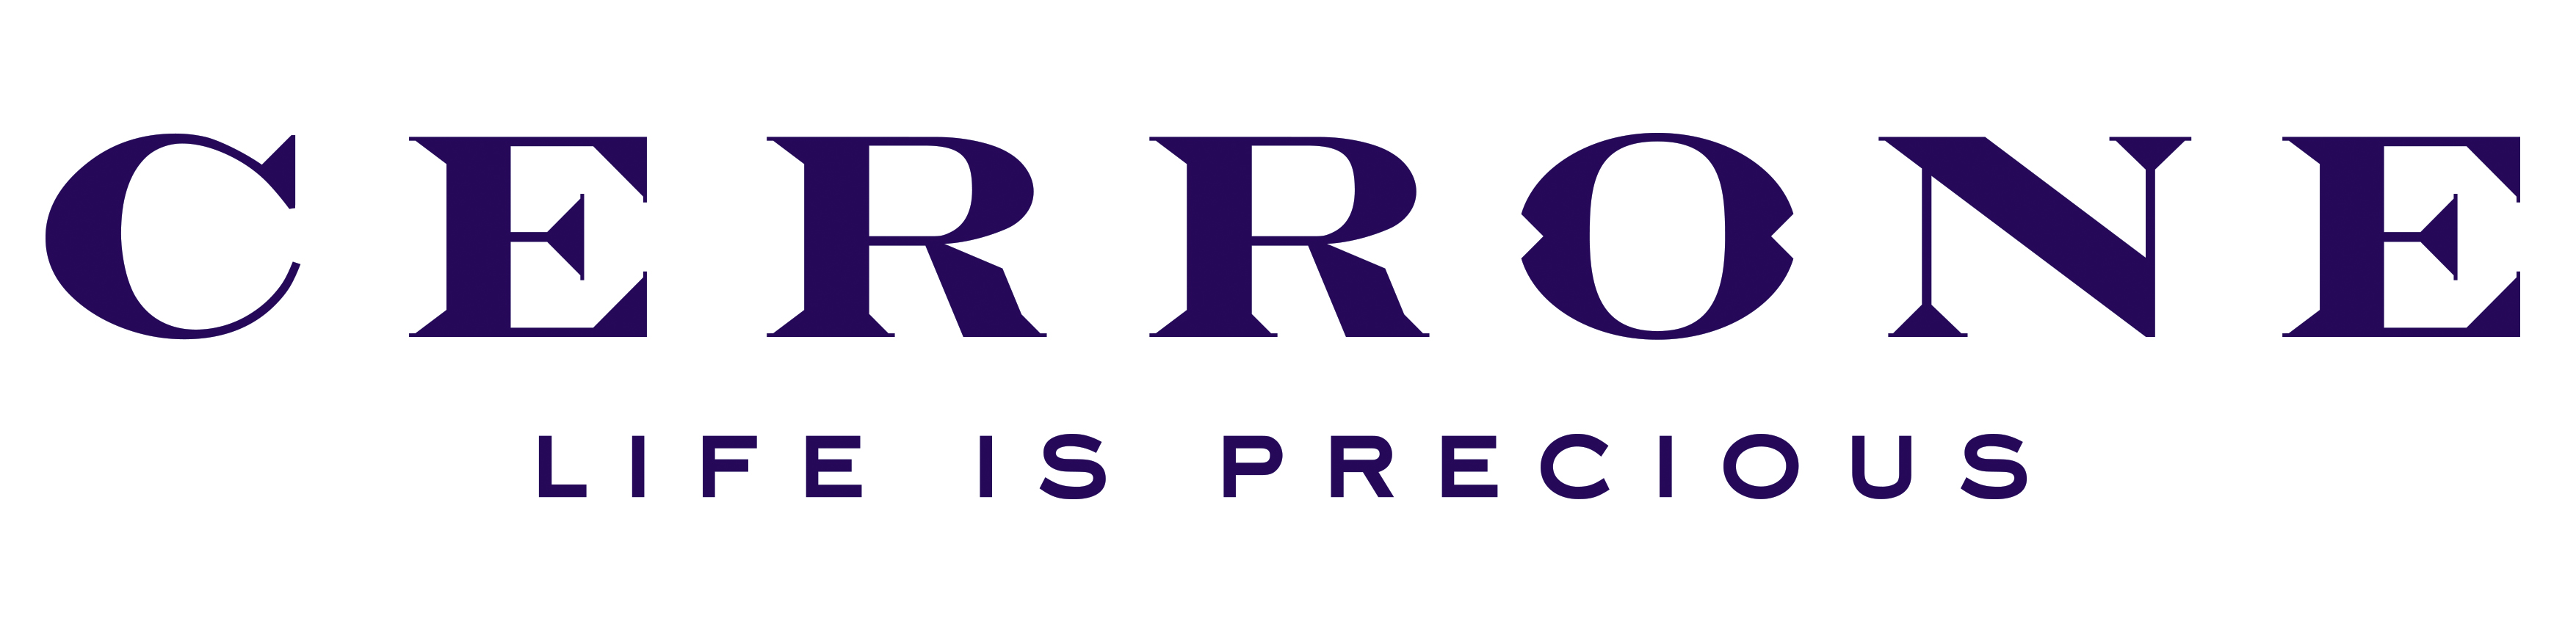 Cerrone Purple_RGB A4 HIRES 300dpi.jpg